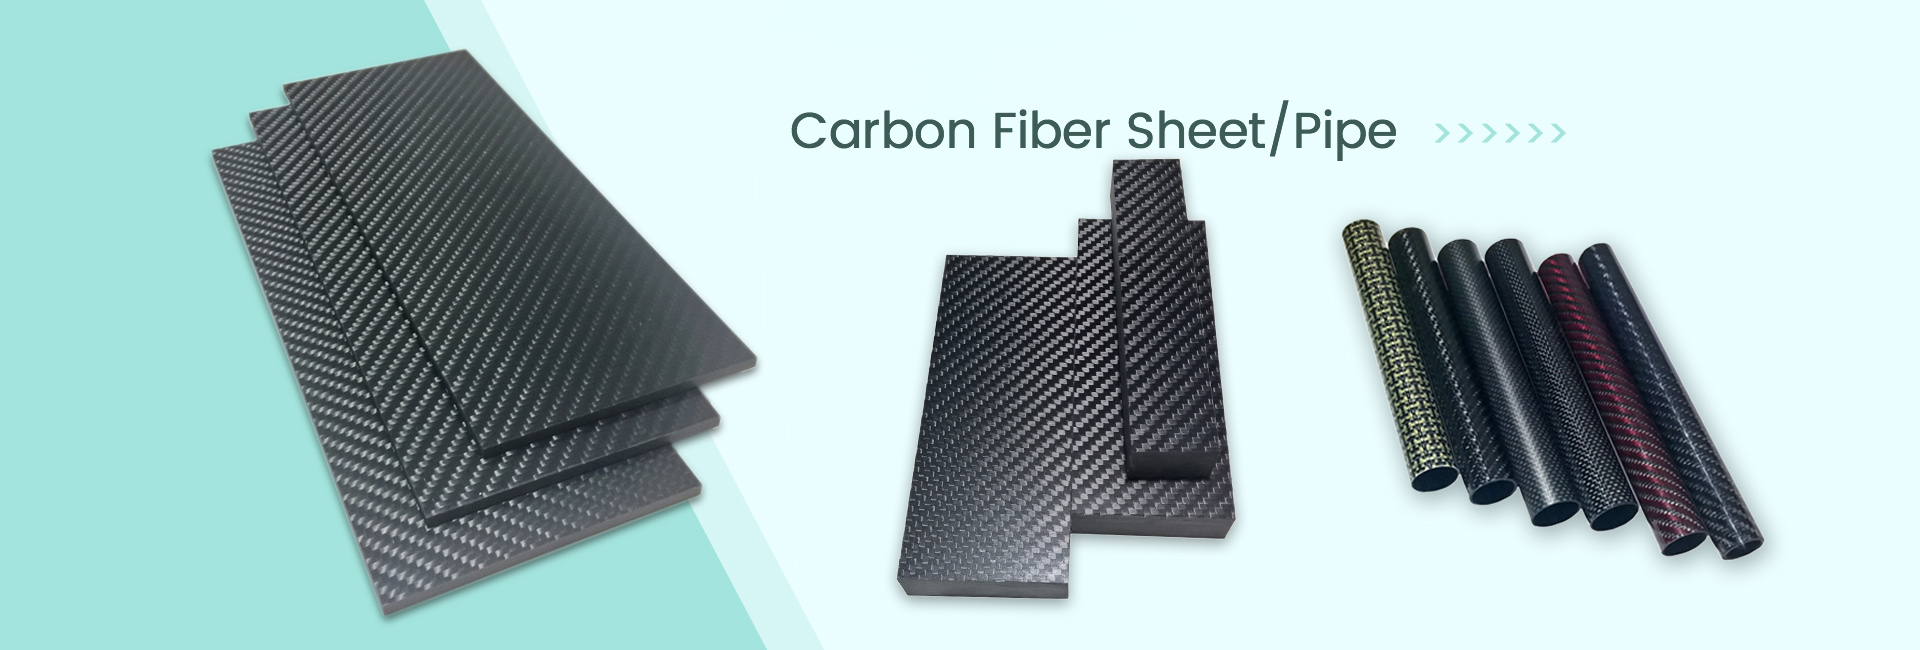 Carbon Fiber Sheet/Pipe